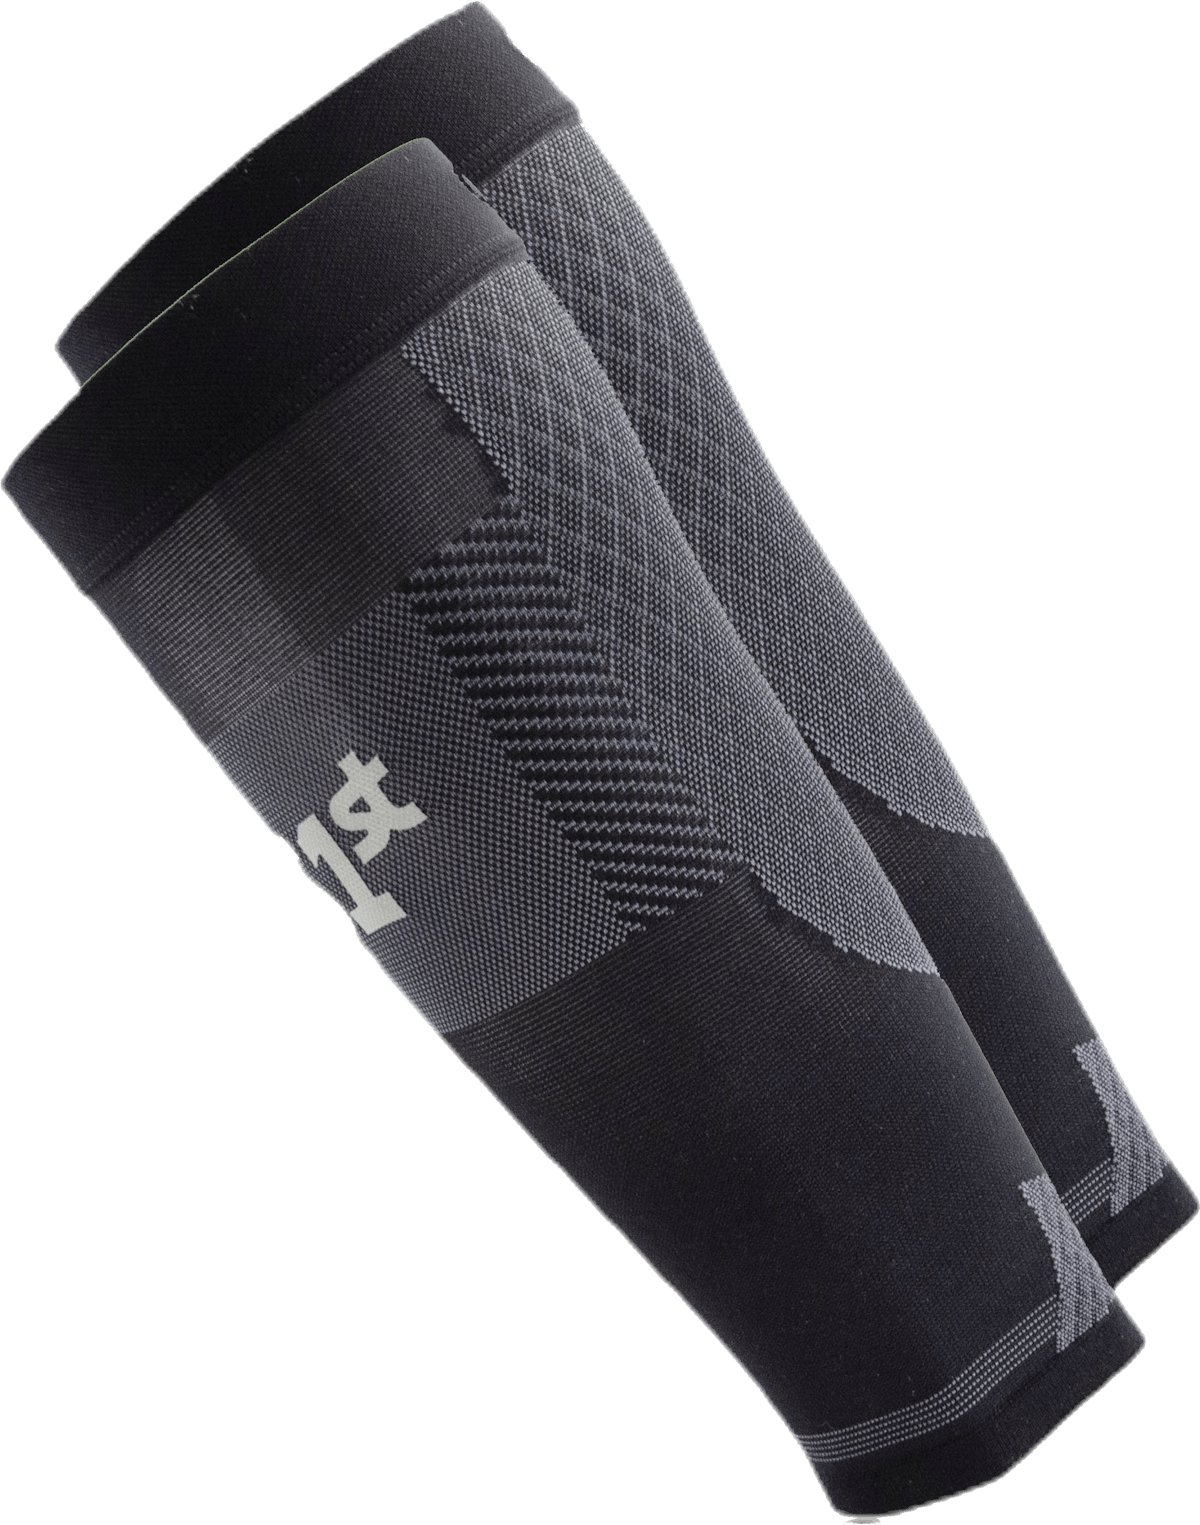 Performance Calf sleeve Black